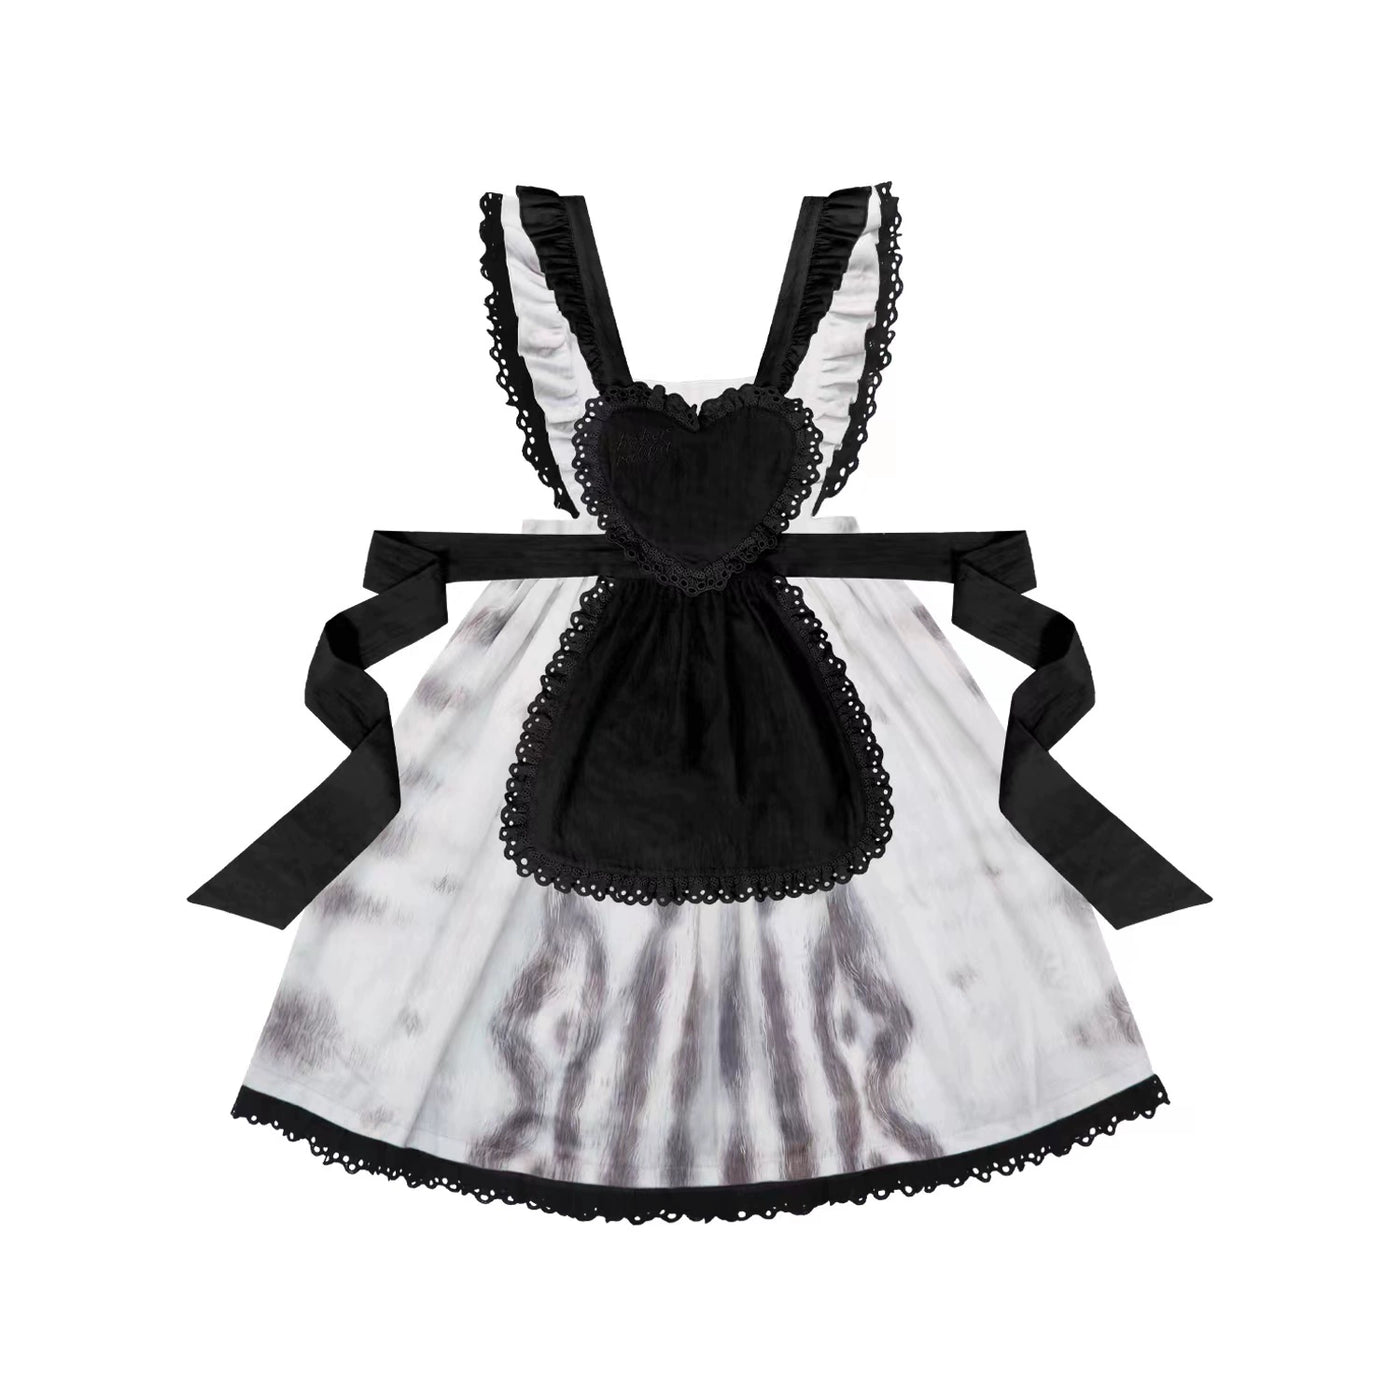 Choker Rabbit~Tabby Cat~Sweet Lolita Salopette Cat Pattern Dress Multicolors silver tabby cat pattern (black) salopette dress+black apron S 